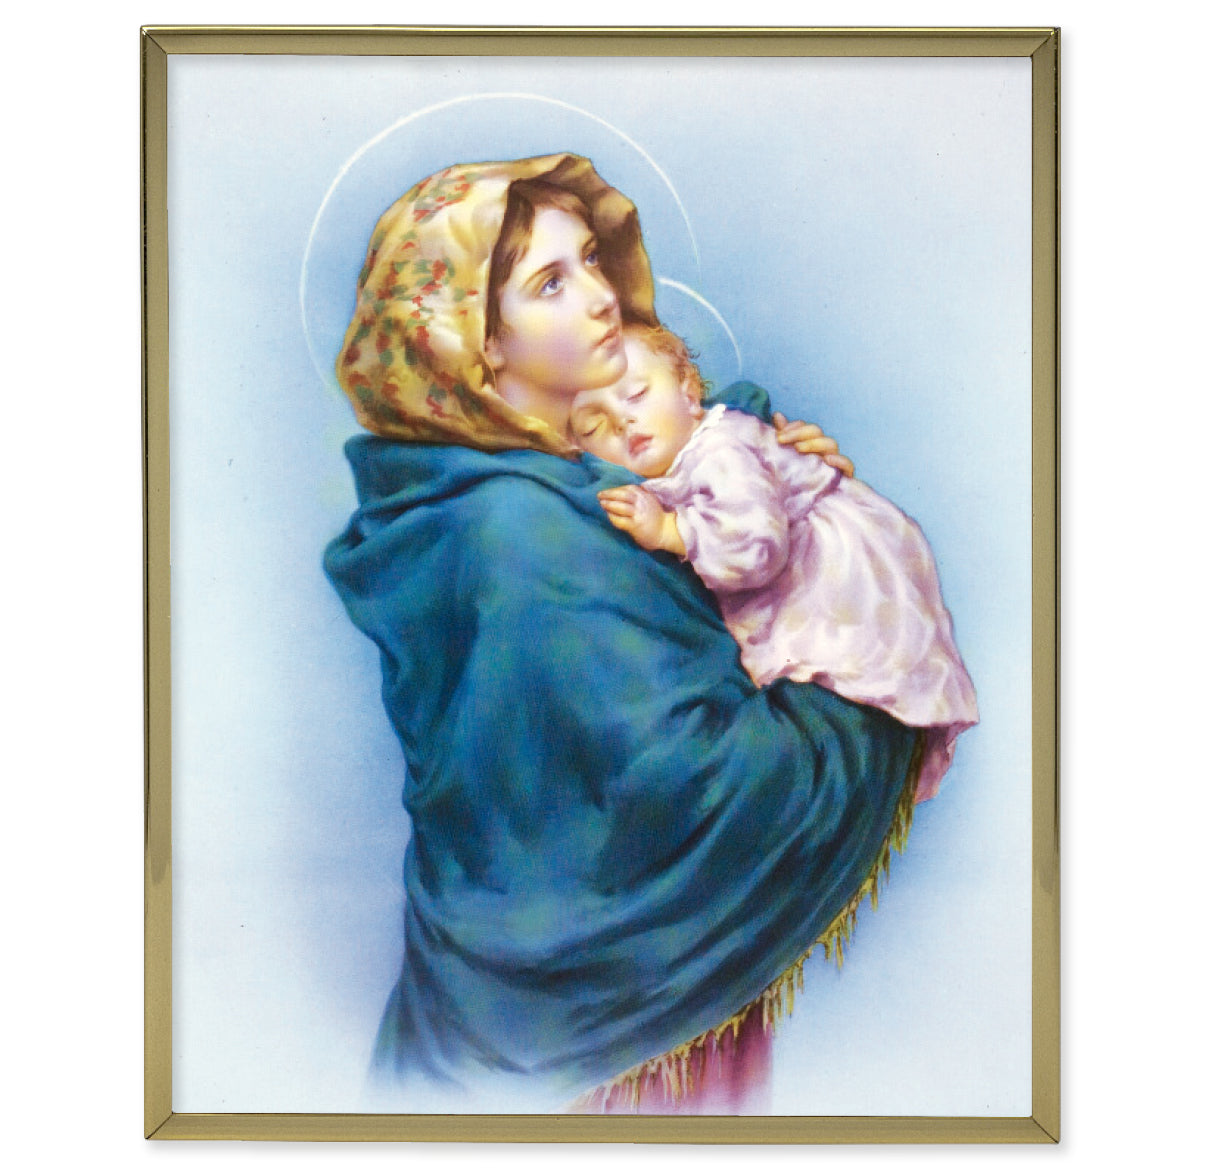 Madonna of the Street Picture Framed Plaque, Large, Gold Plaque Frame